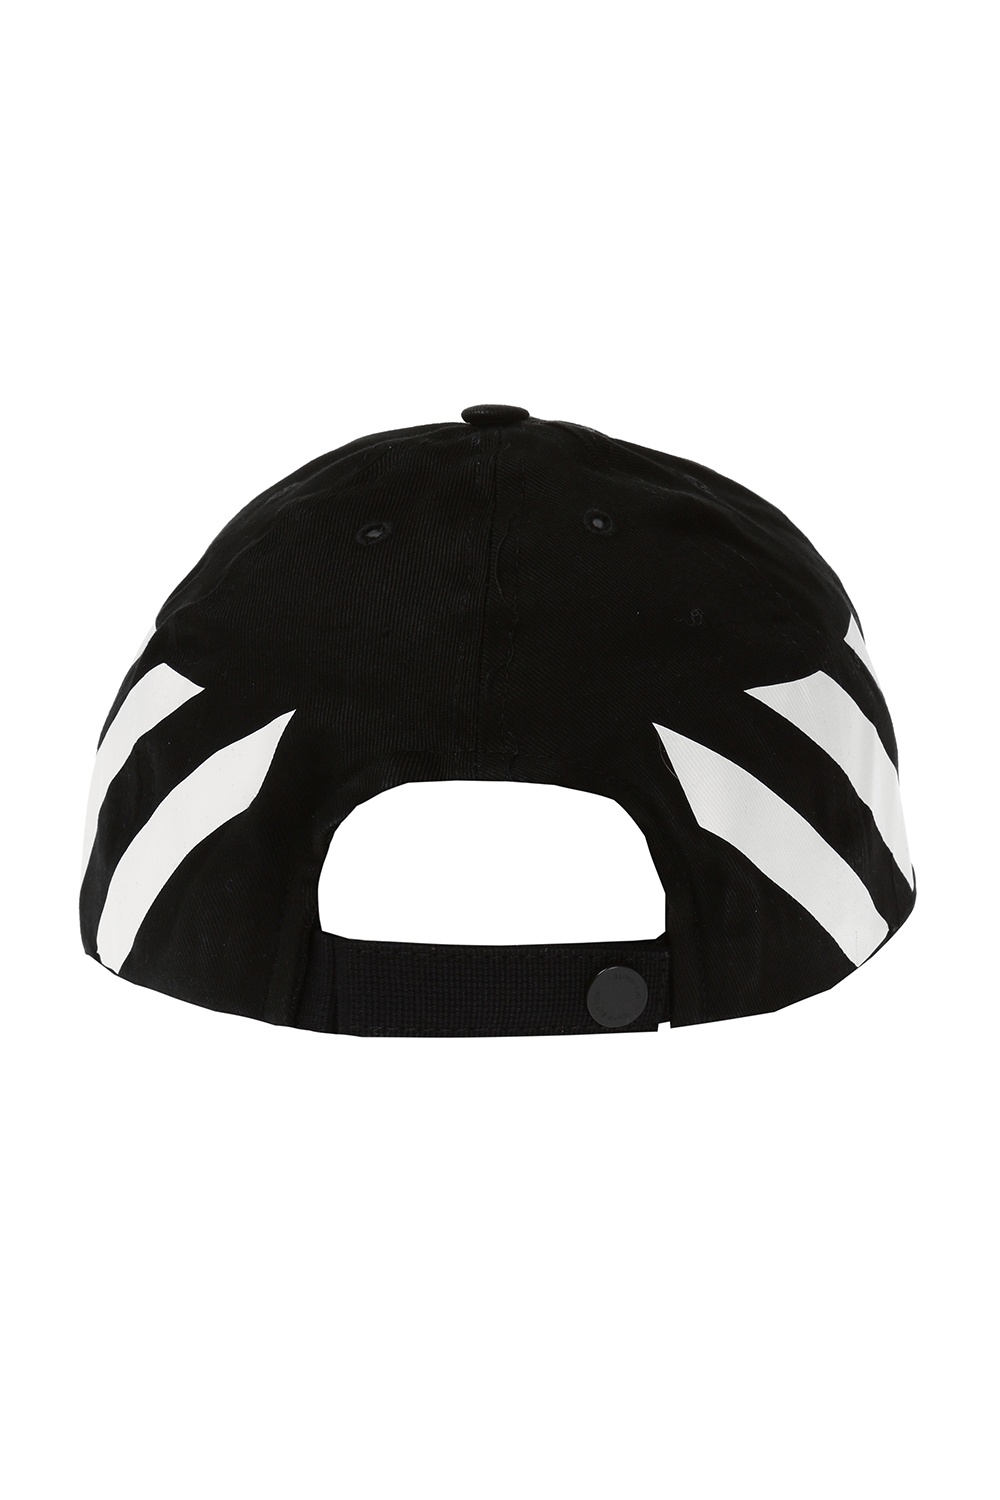 France baseball - Printed Off-White cap Black Vitkac